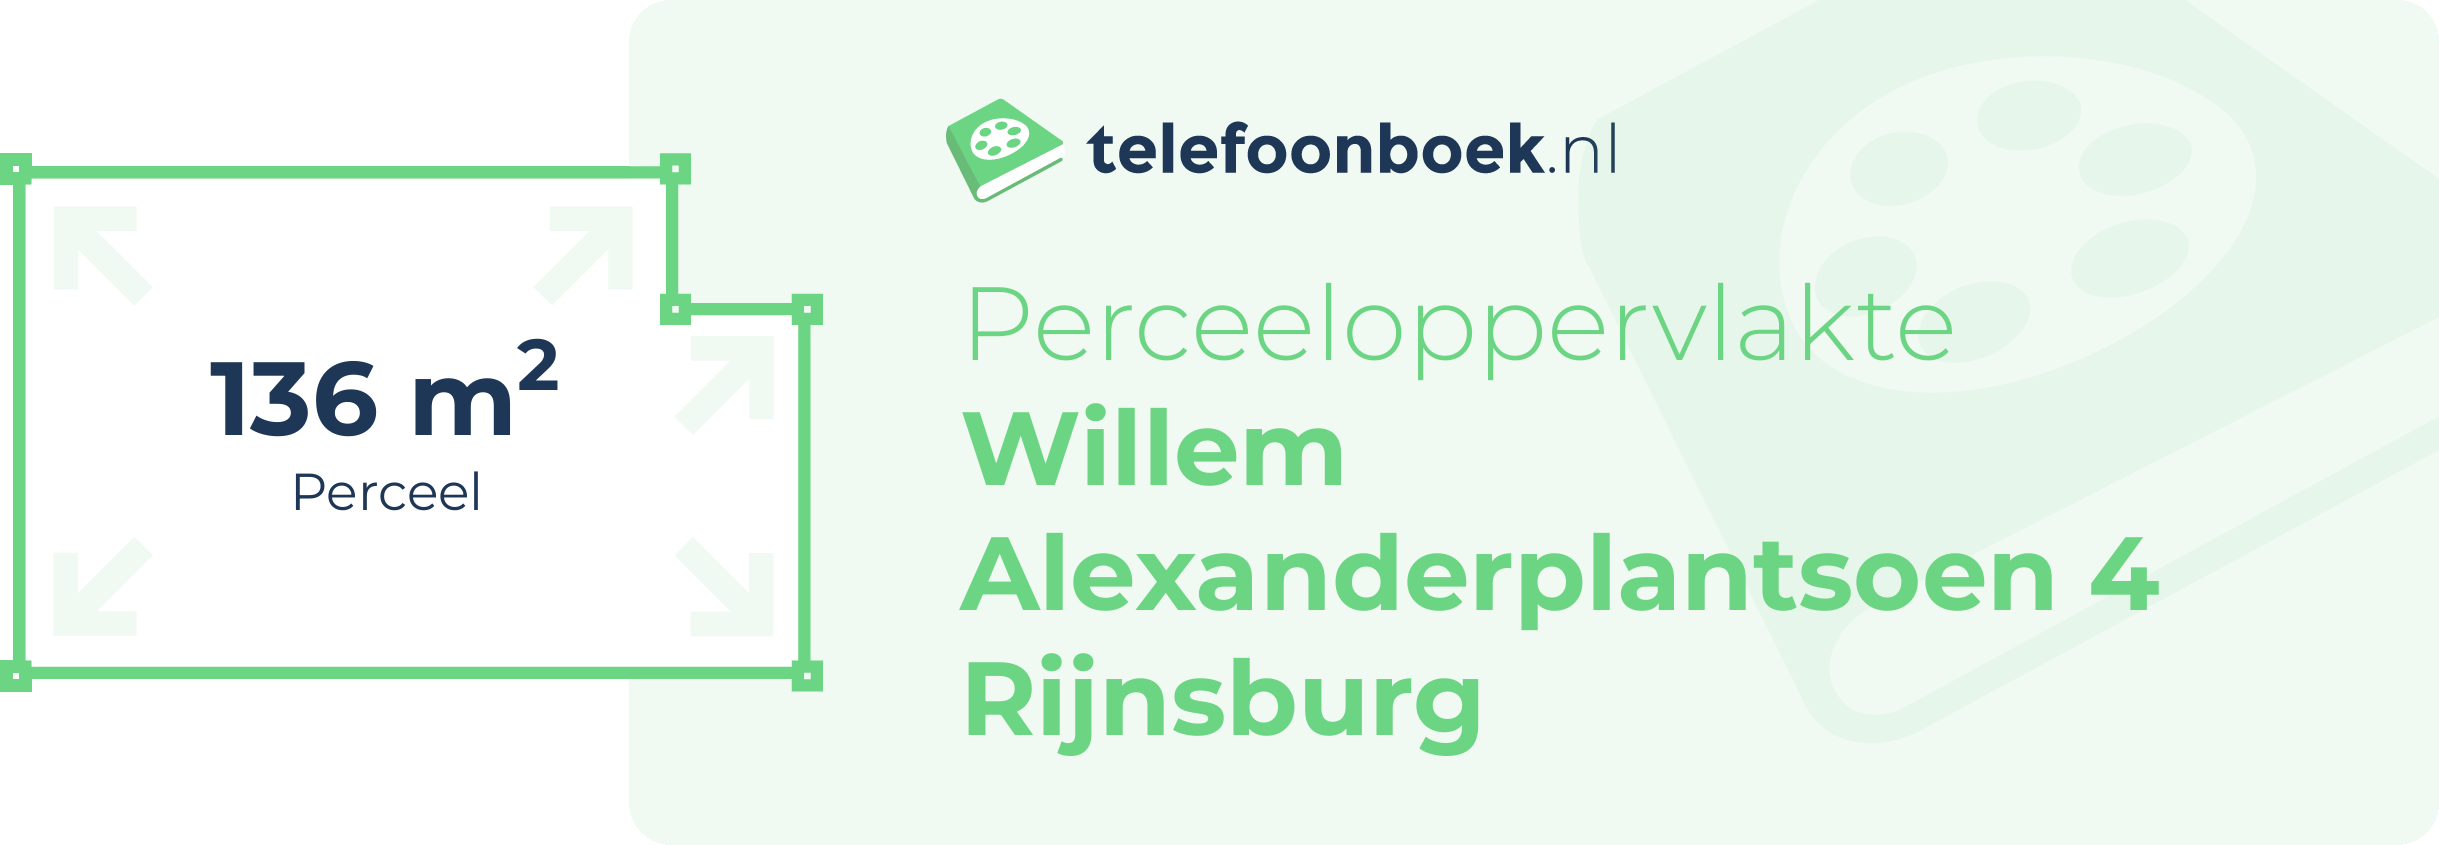 Perceeloppervlakte Willem Alexanderplantsoen 4 Rijnsburg